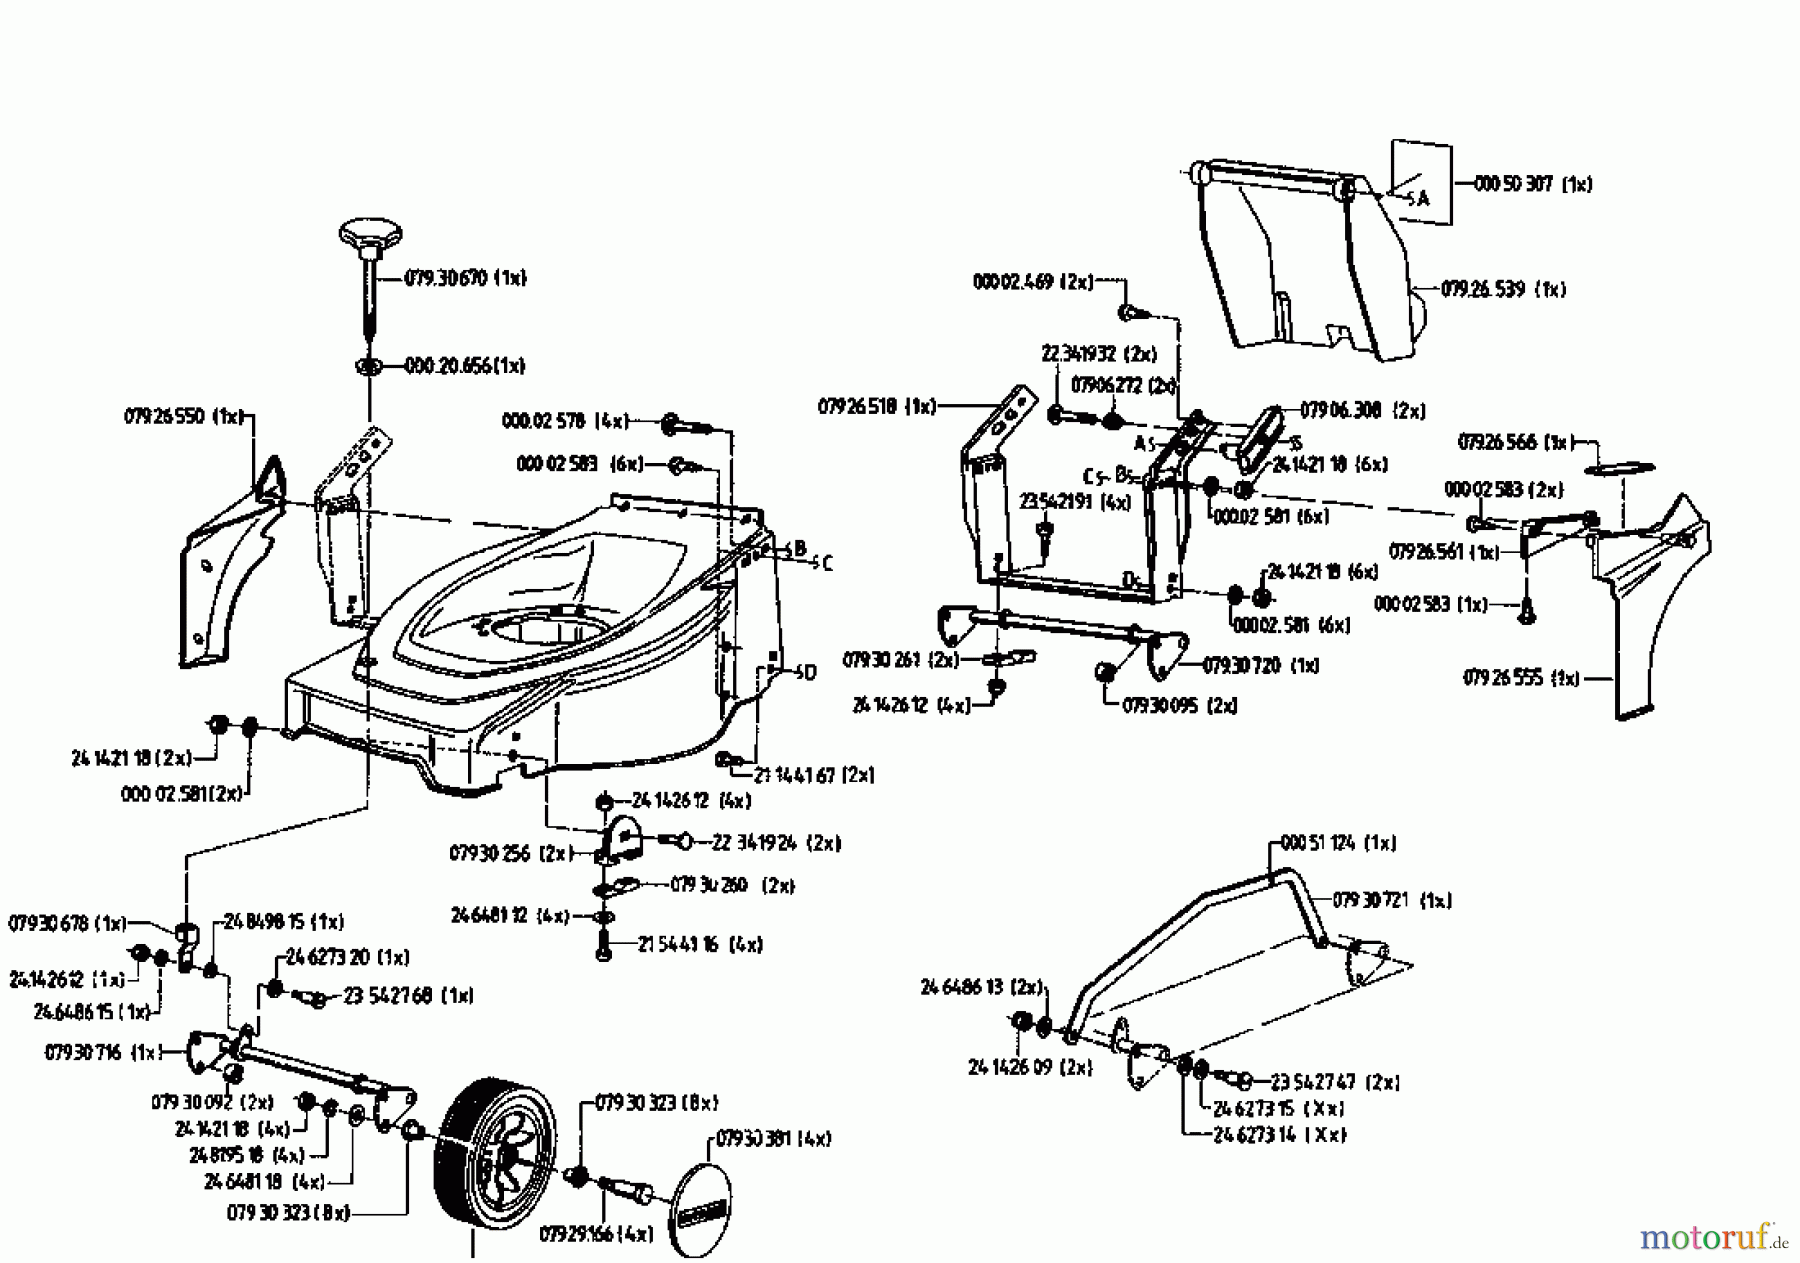  Gutbrod Petrol mower HB 42 L 04028.02  (1995) Basic machine